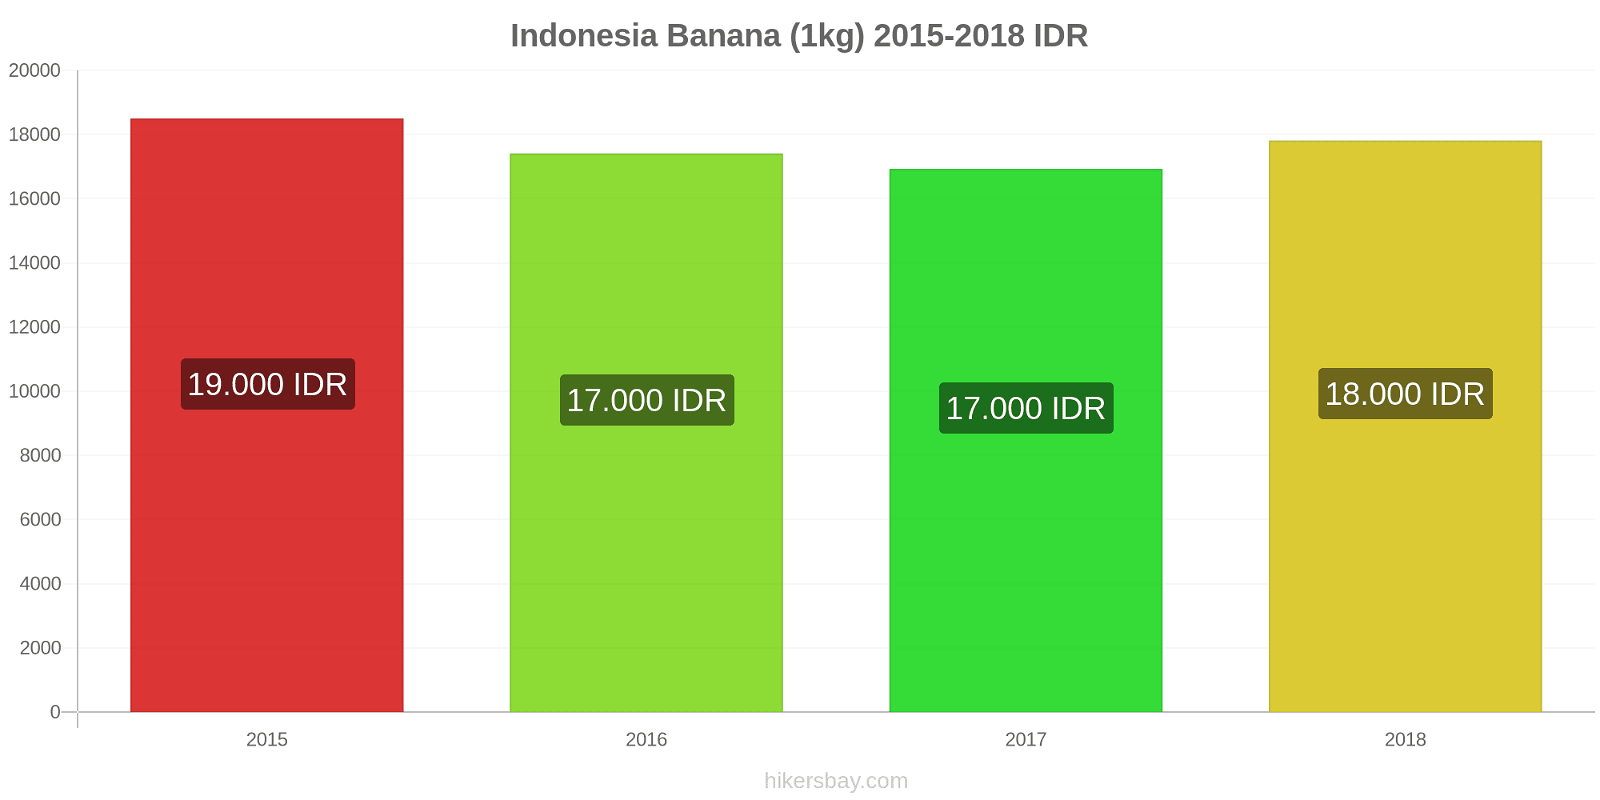 Indonesia cambi di prezzo Banane (1kg) hikersbay.com